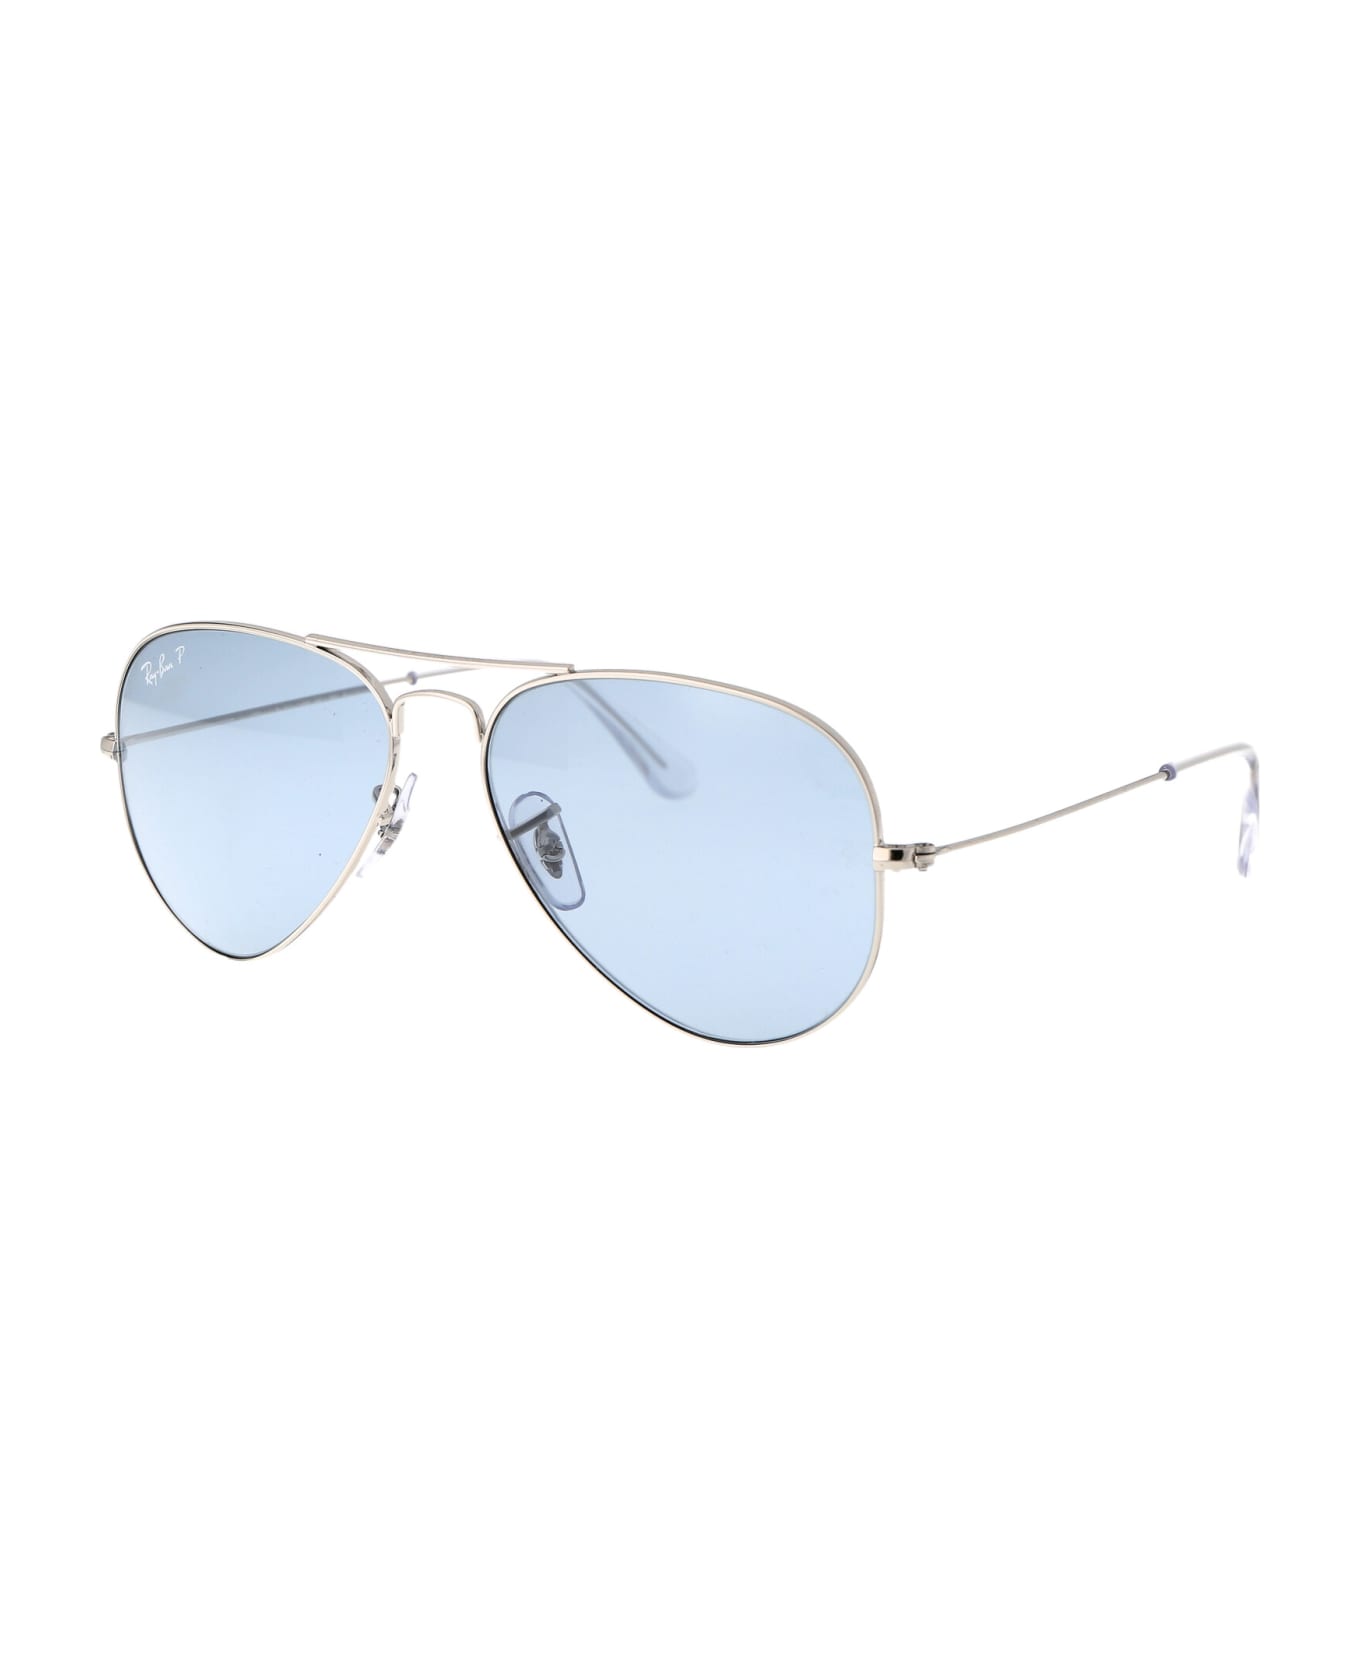 Ray-Ban Aviator Sunglasses - 003/02 Silver